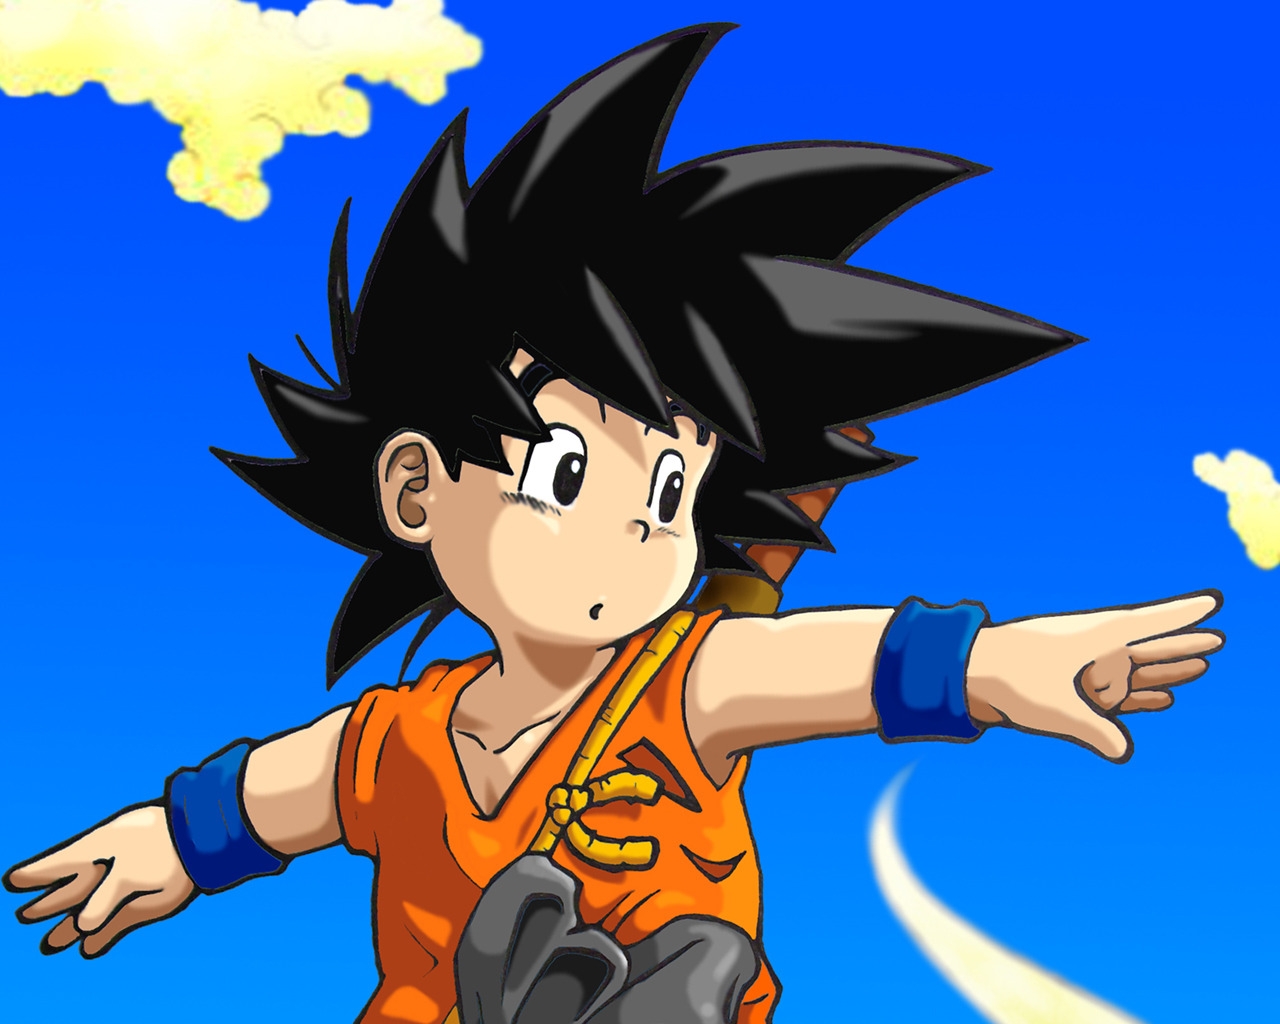 Son Goku for 1280 x 1024 resolution